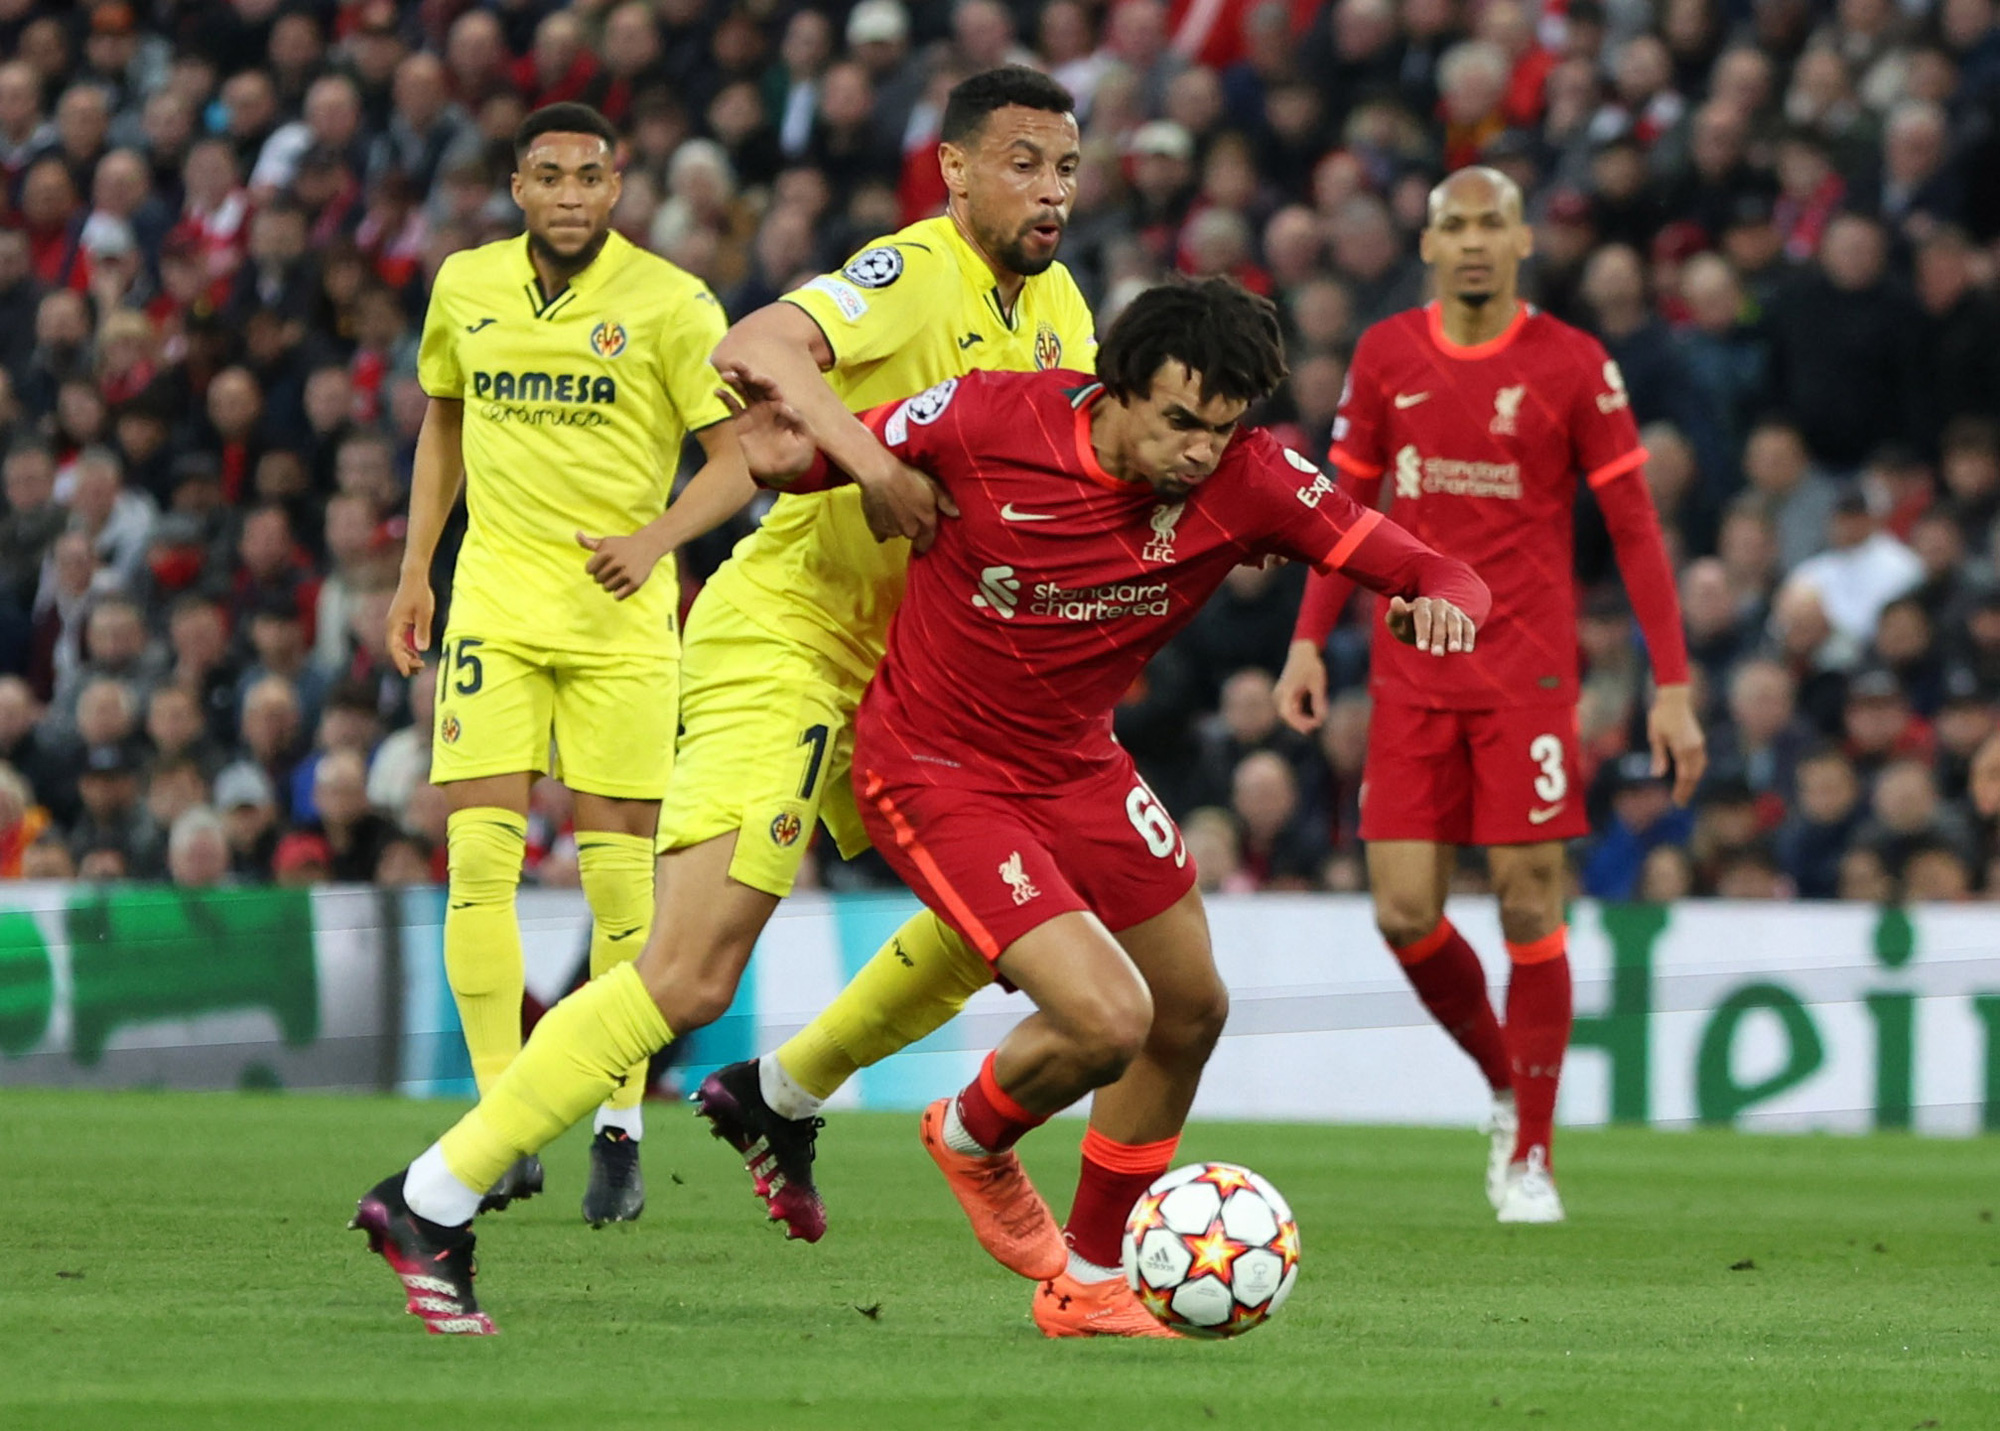 Soi kèo, tỷ lệ cược Villarreal vs Liverpool: Khó cản The Kop